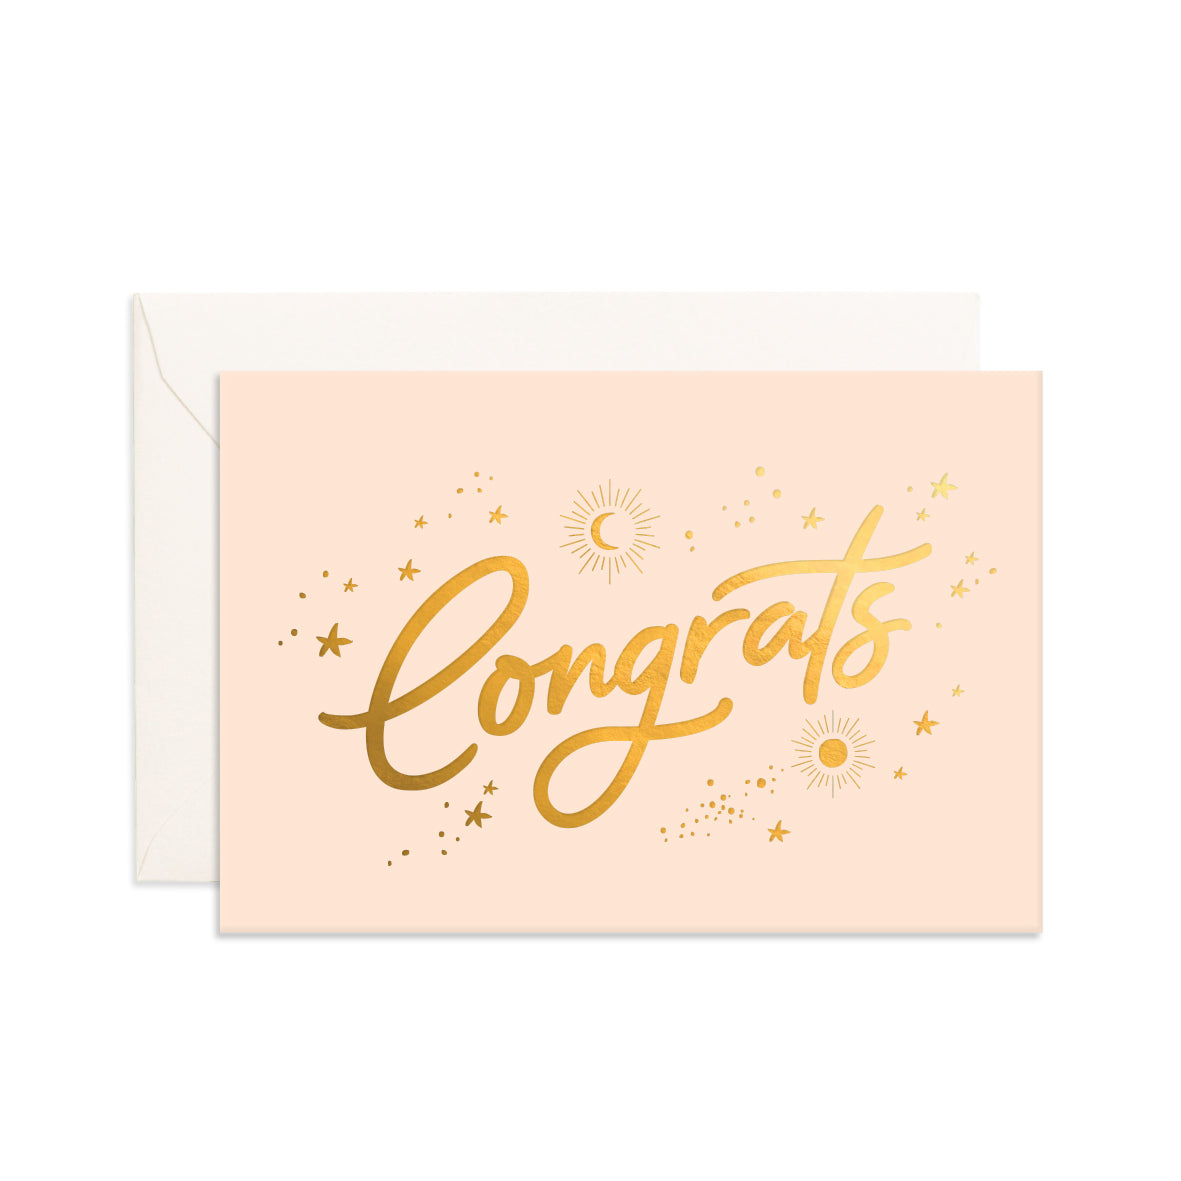 'Congrats' Mini Greeting Card